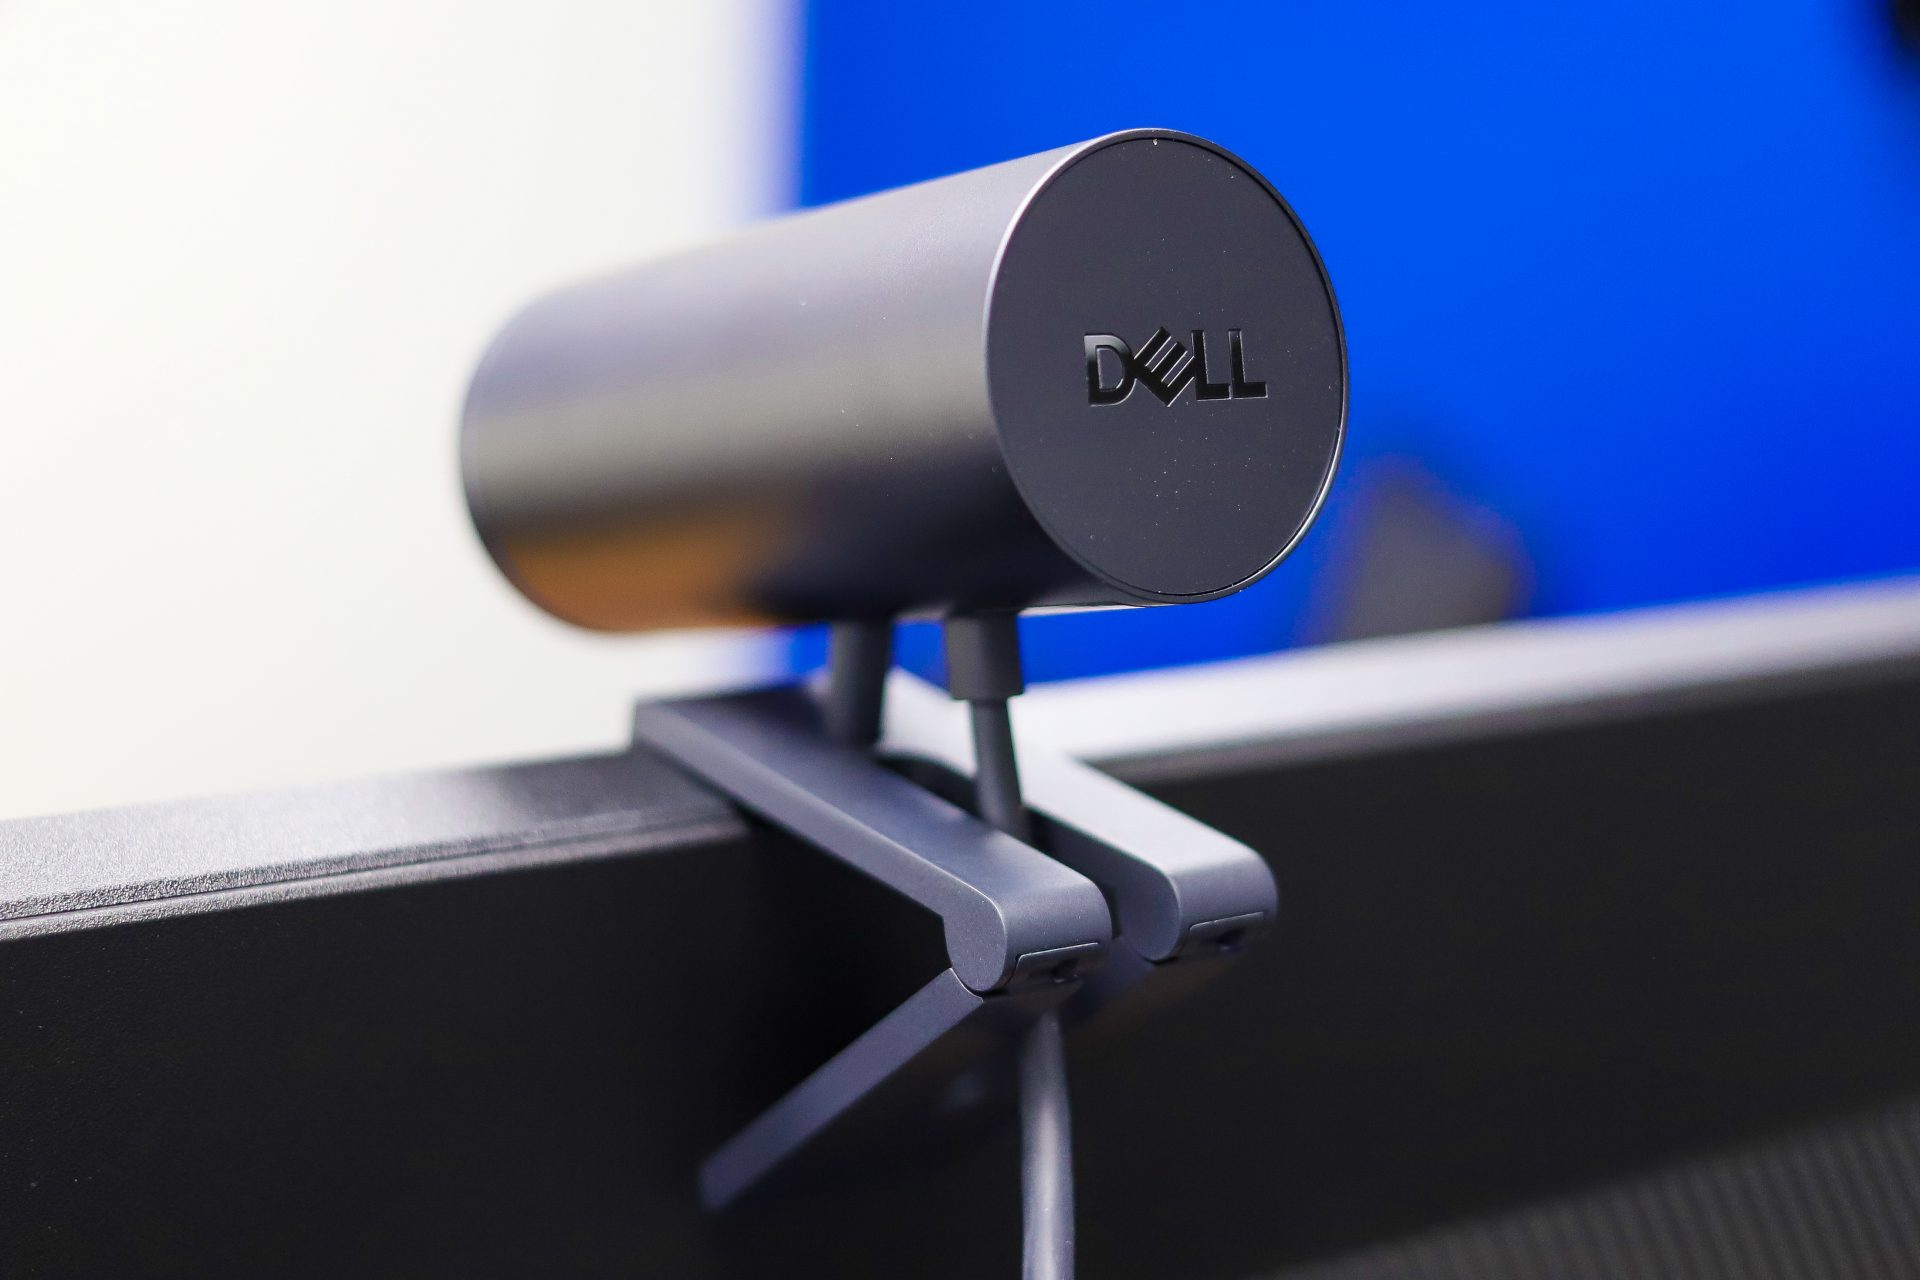 Dell UltraSharp Webcam on monitor